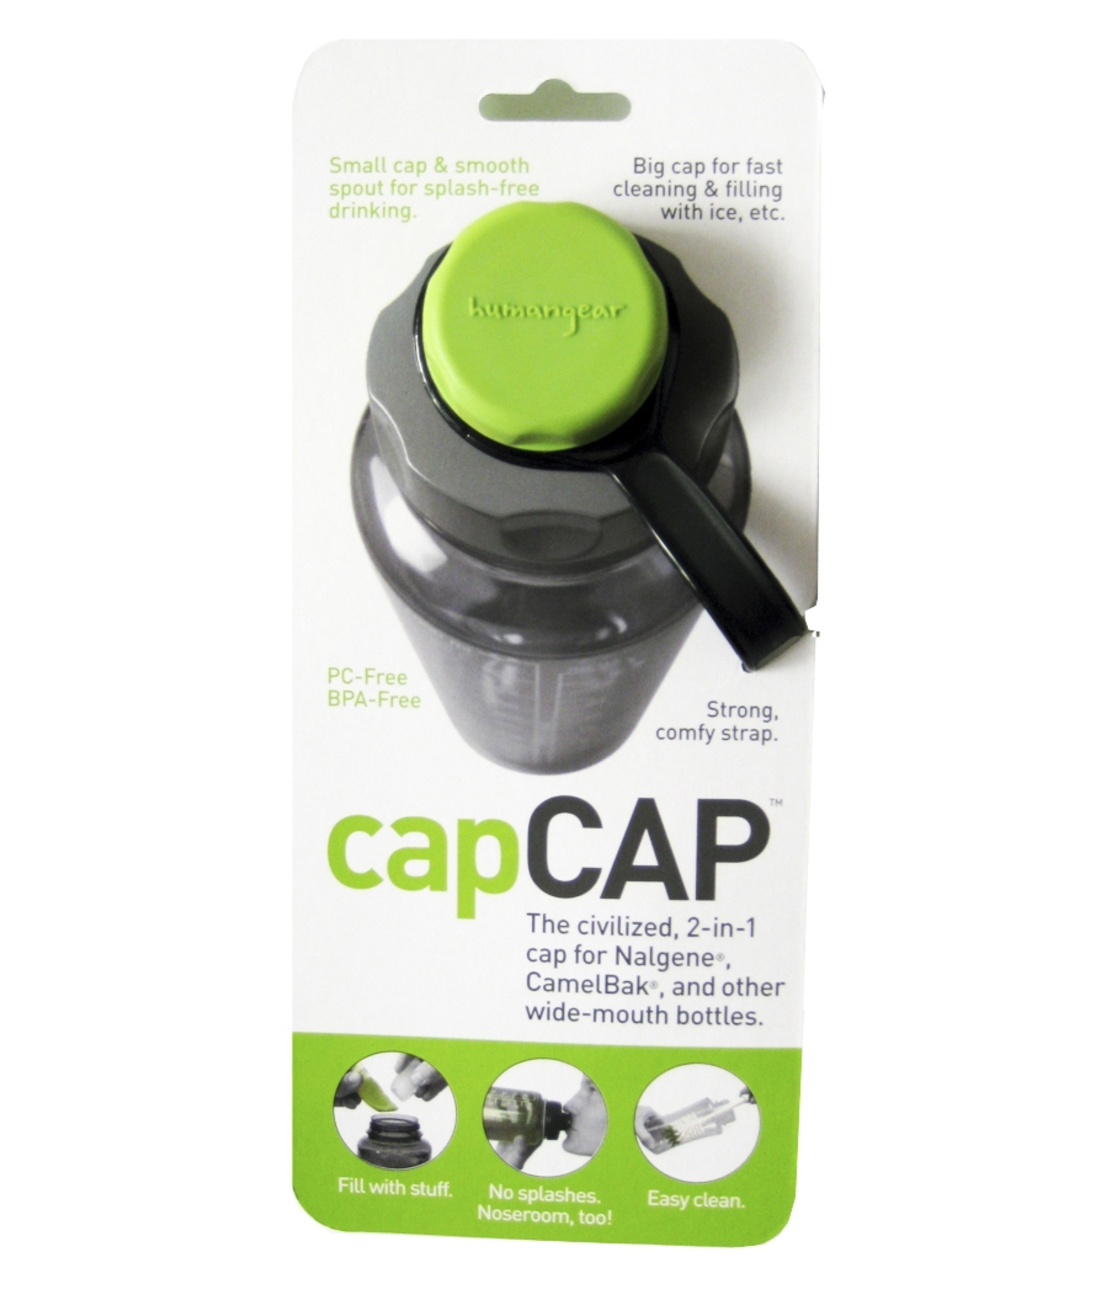 capCAP+ Flaschendeckel